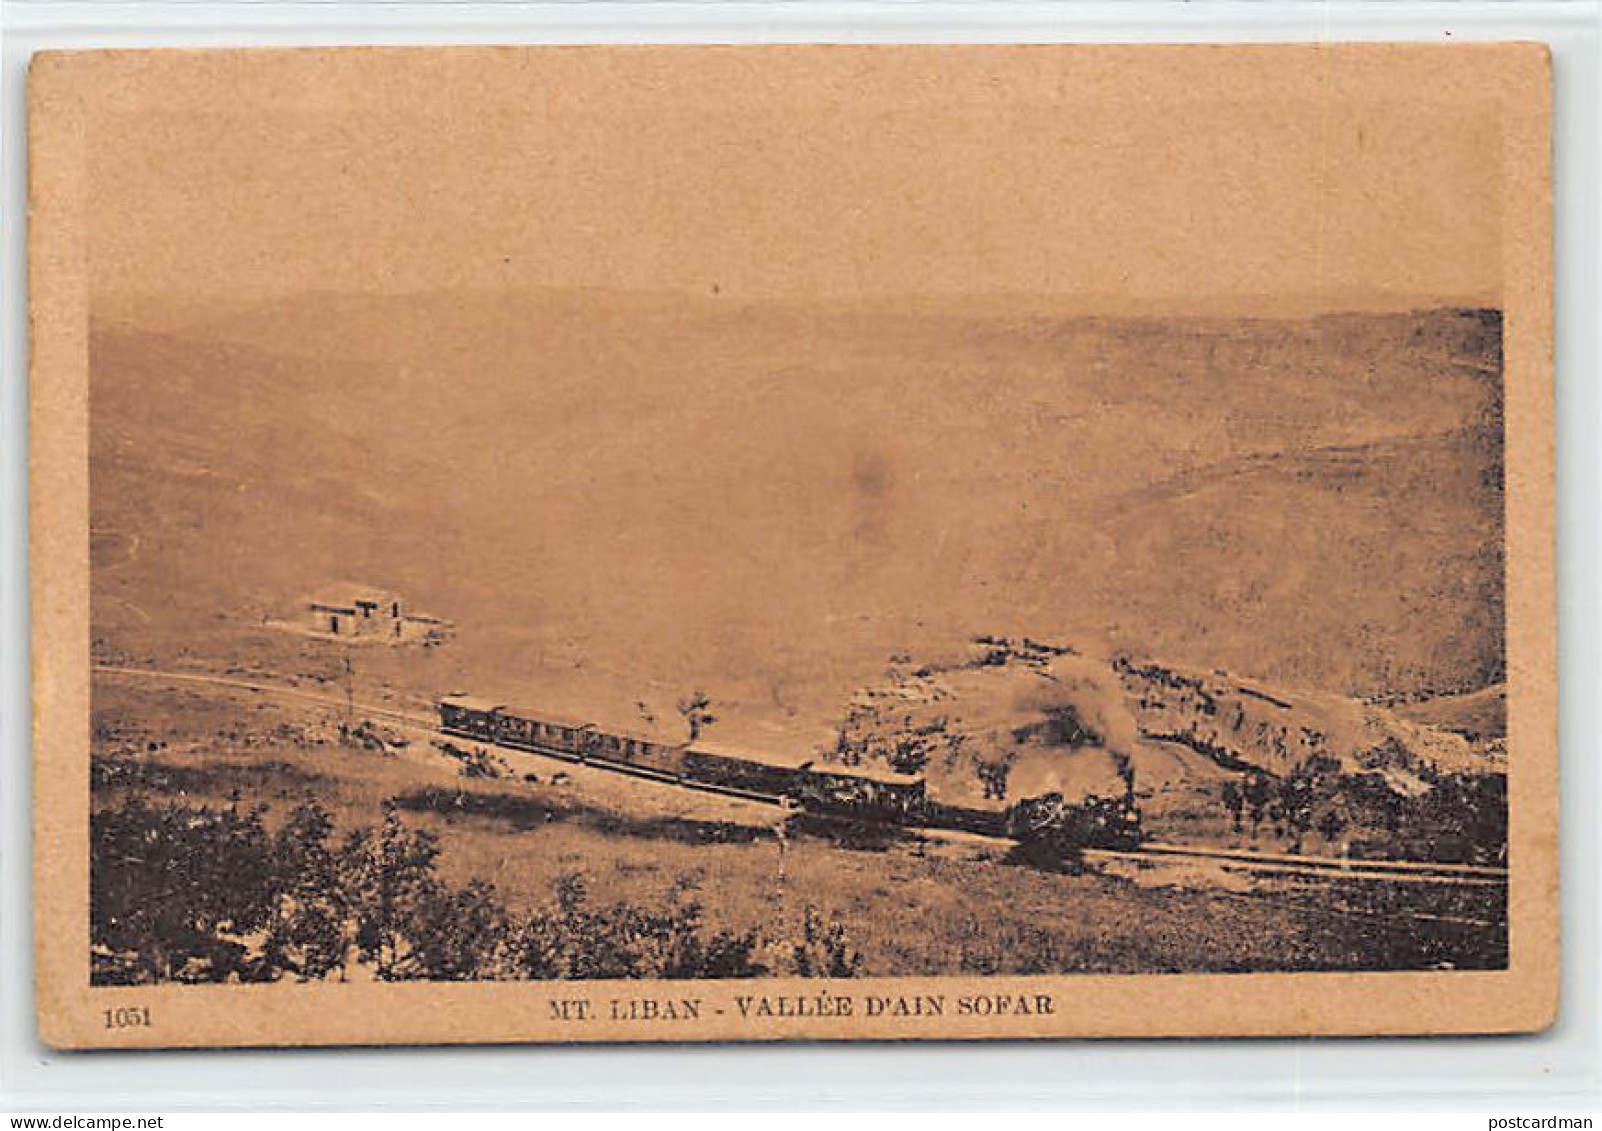 Liban - Vallée D'Ain Sofar (Swafar) - Le Passage Du Train - Ed. Sarrafian Bros. 1051 - Libanon